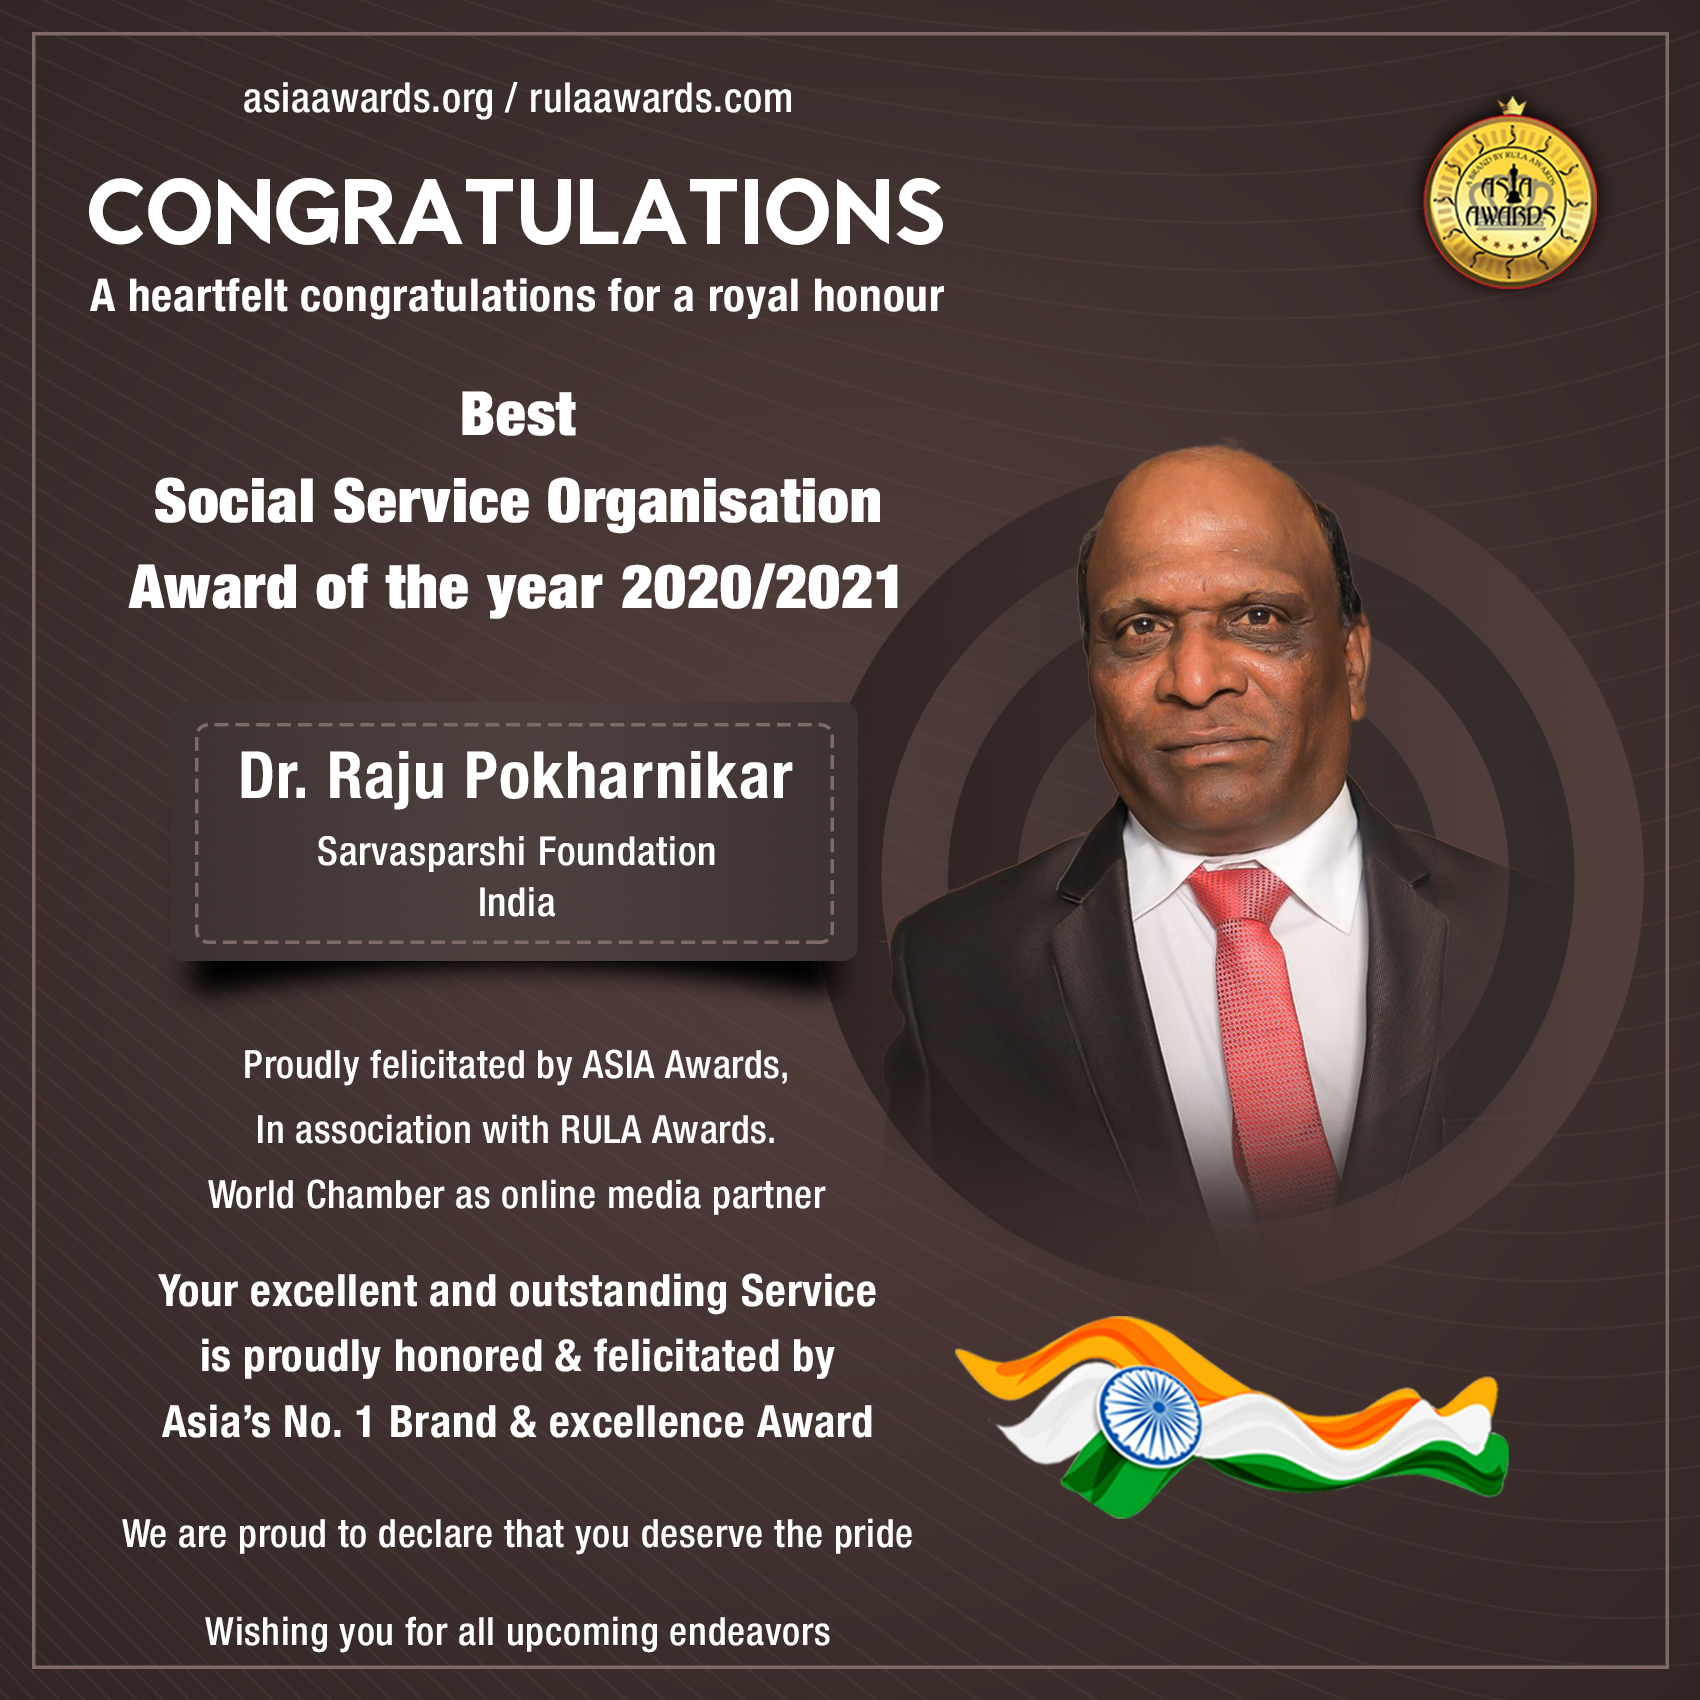 Sarvasparshi Foundation has bagged Best Social Service Organisation Award